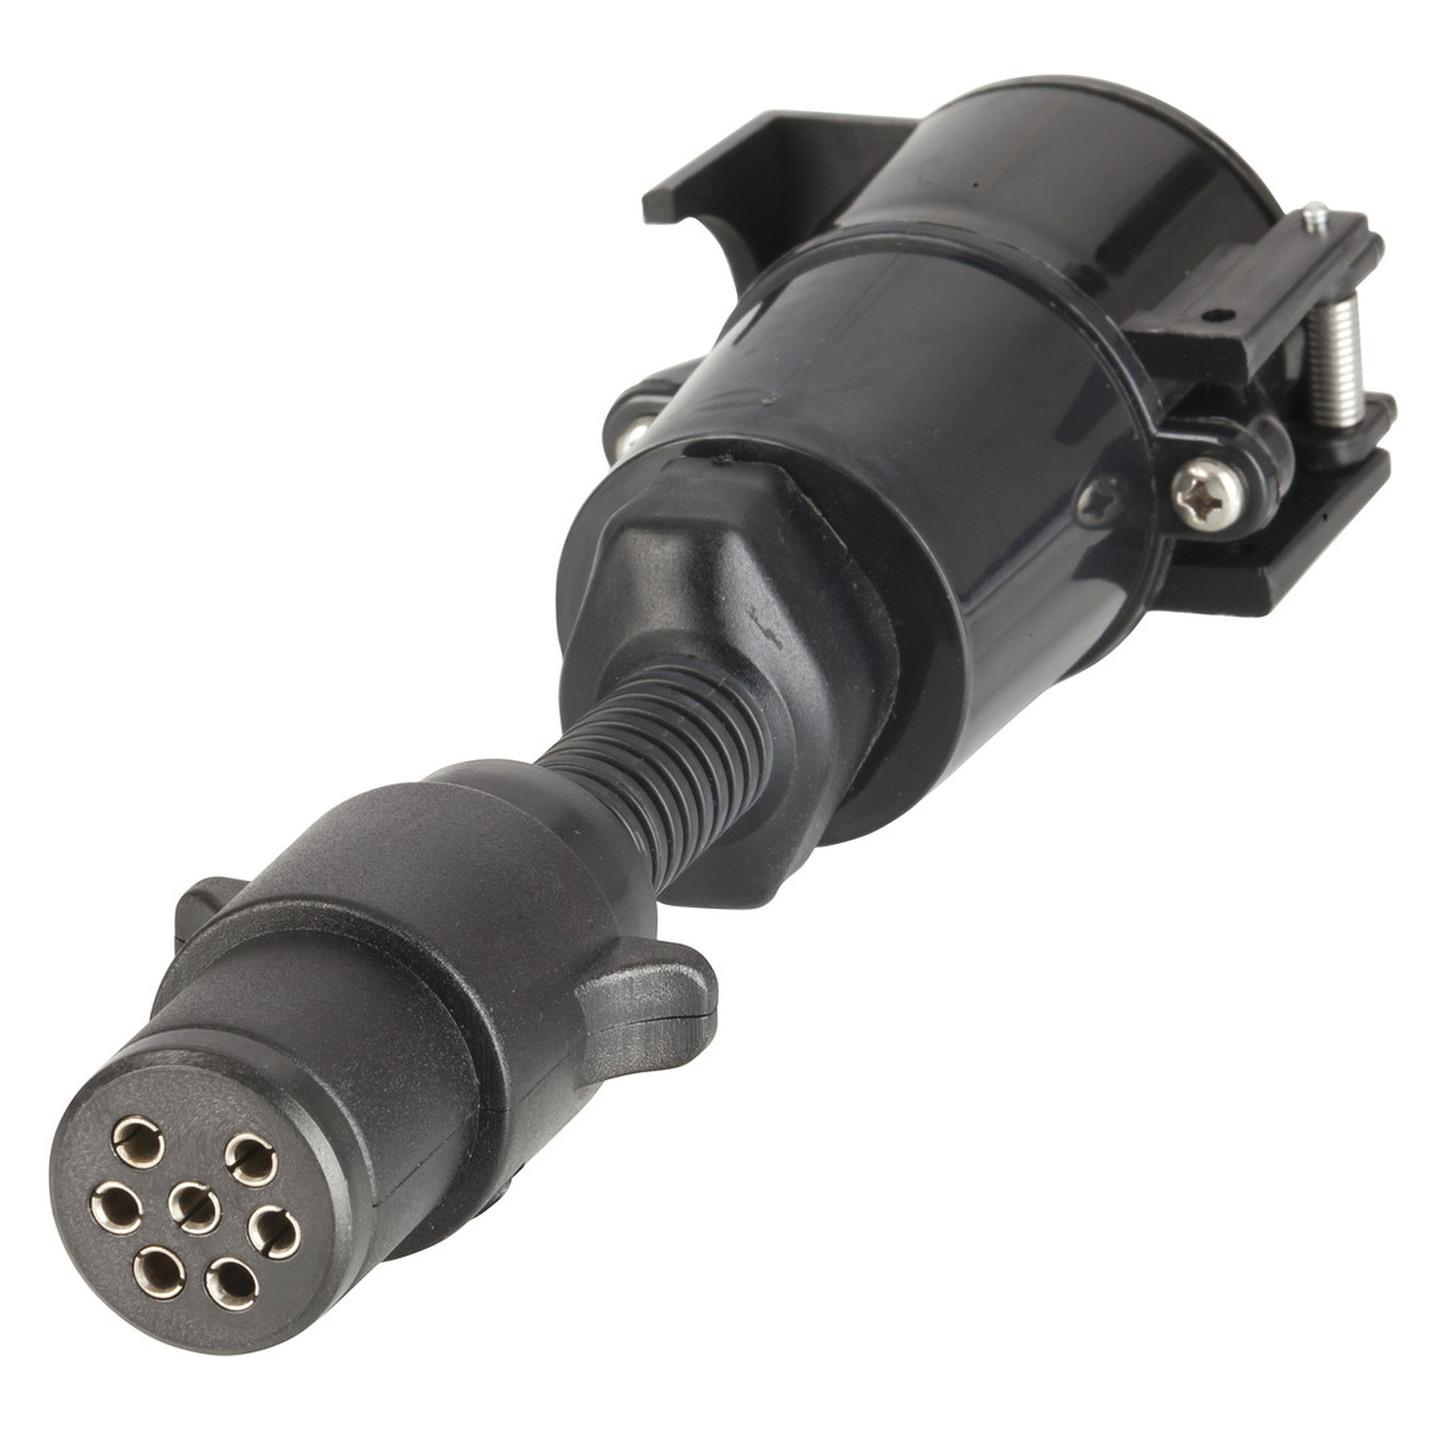 Trailer Adaptor - 7 Pin Small Round Plug to 7 Pin Large Round Socket